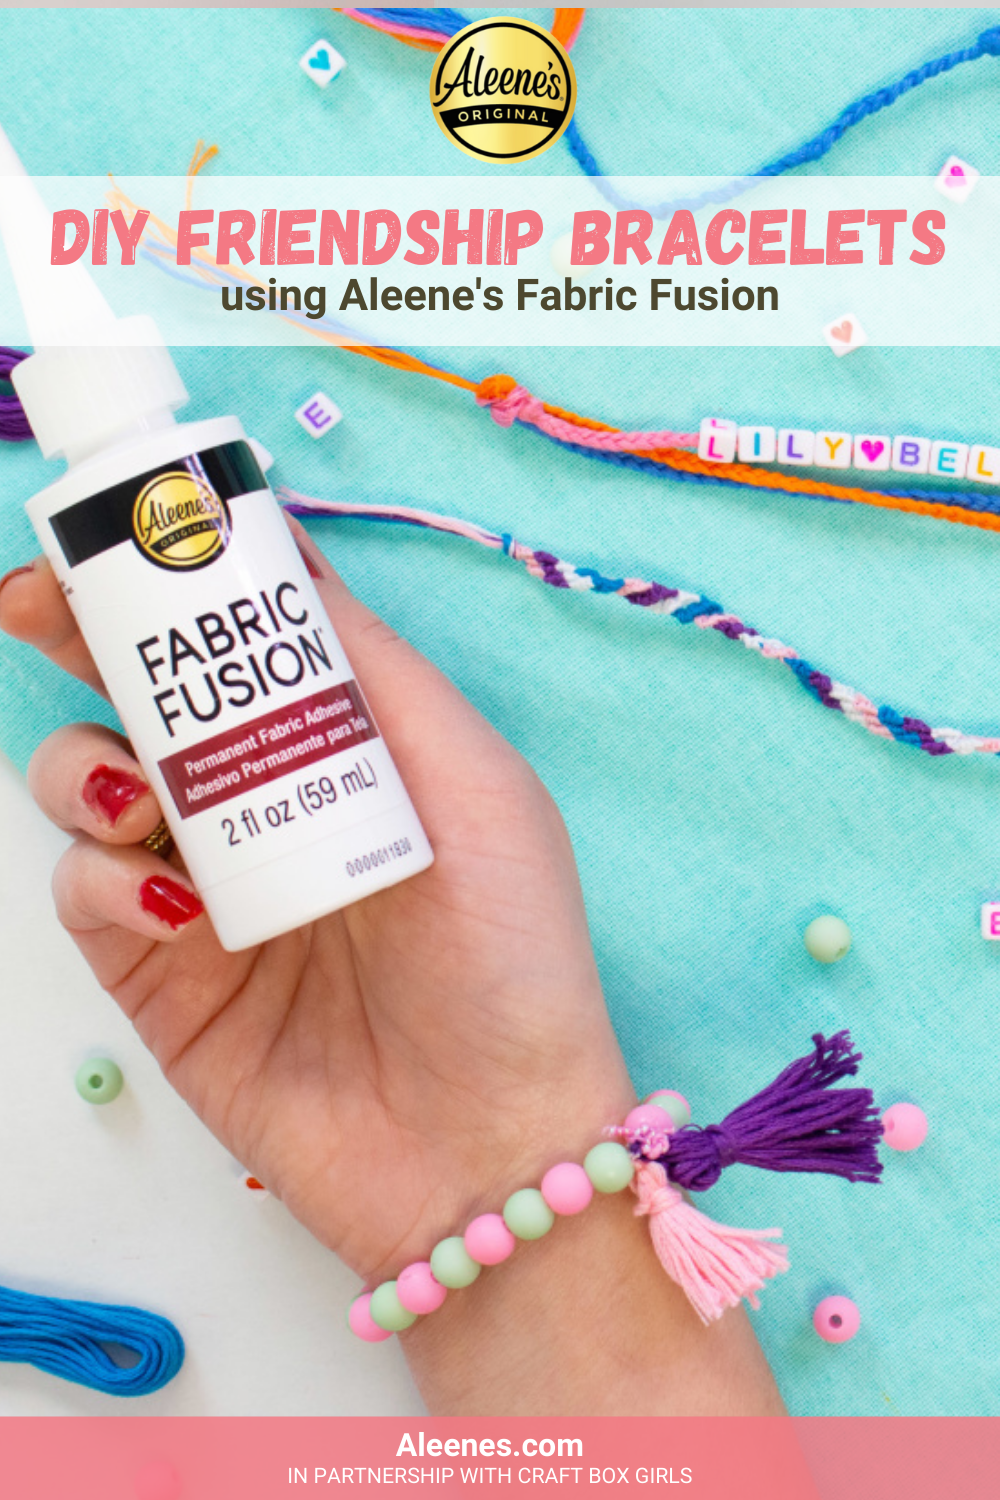 Aleene's Original Glues - Easy DIY Friendship Bracelets with